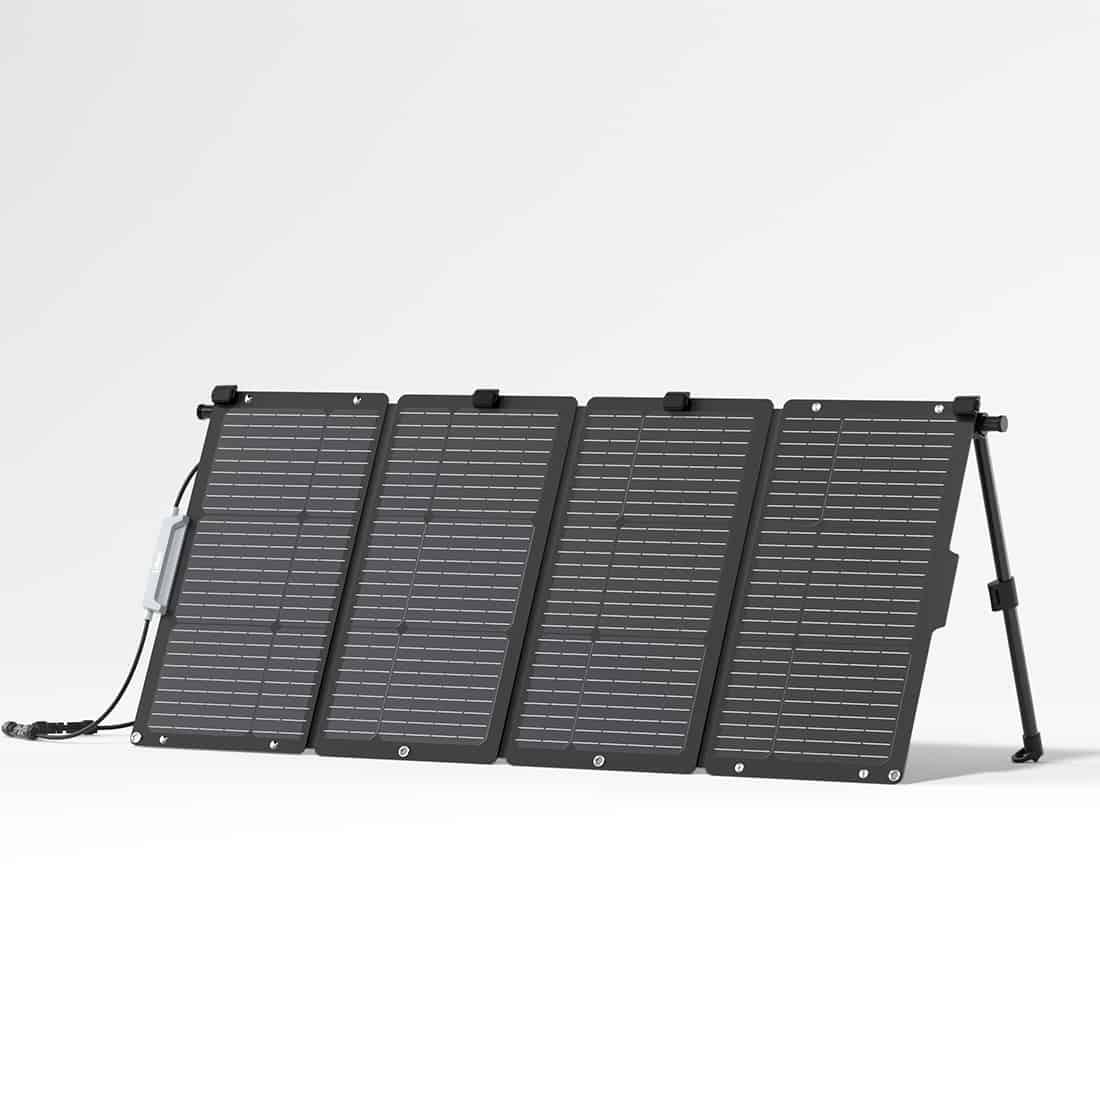 Litheli 100W Solar Panel